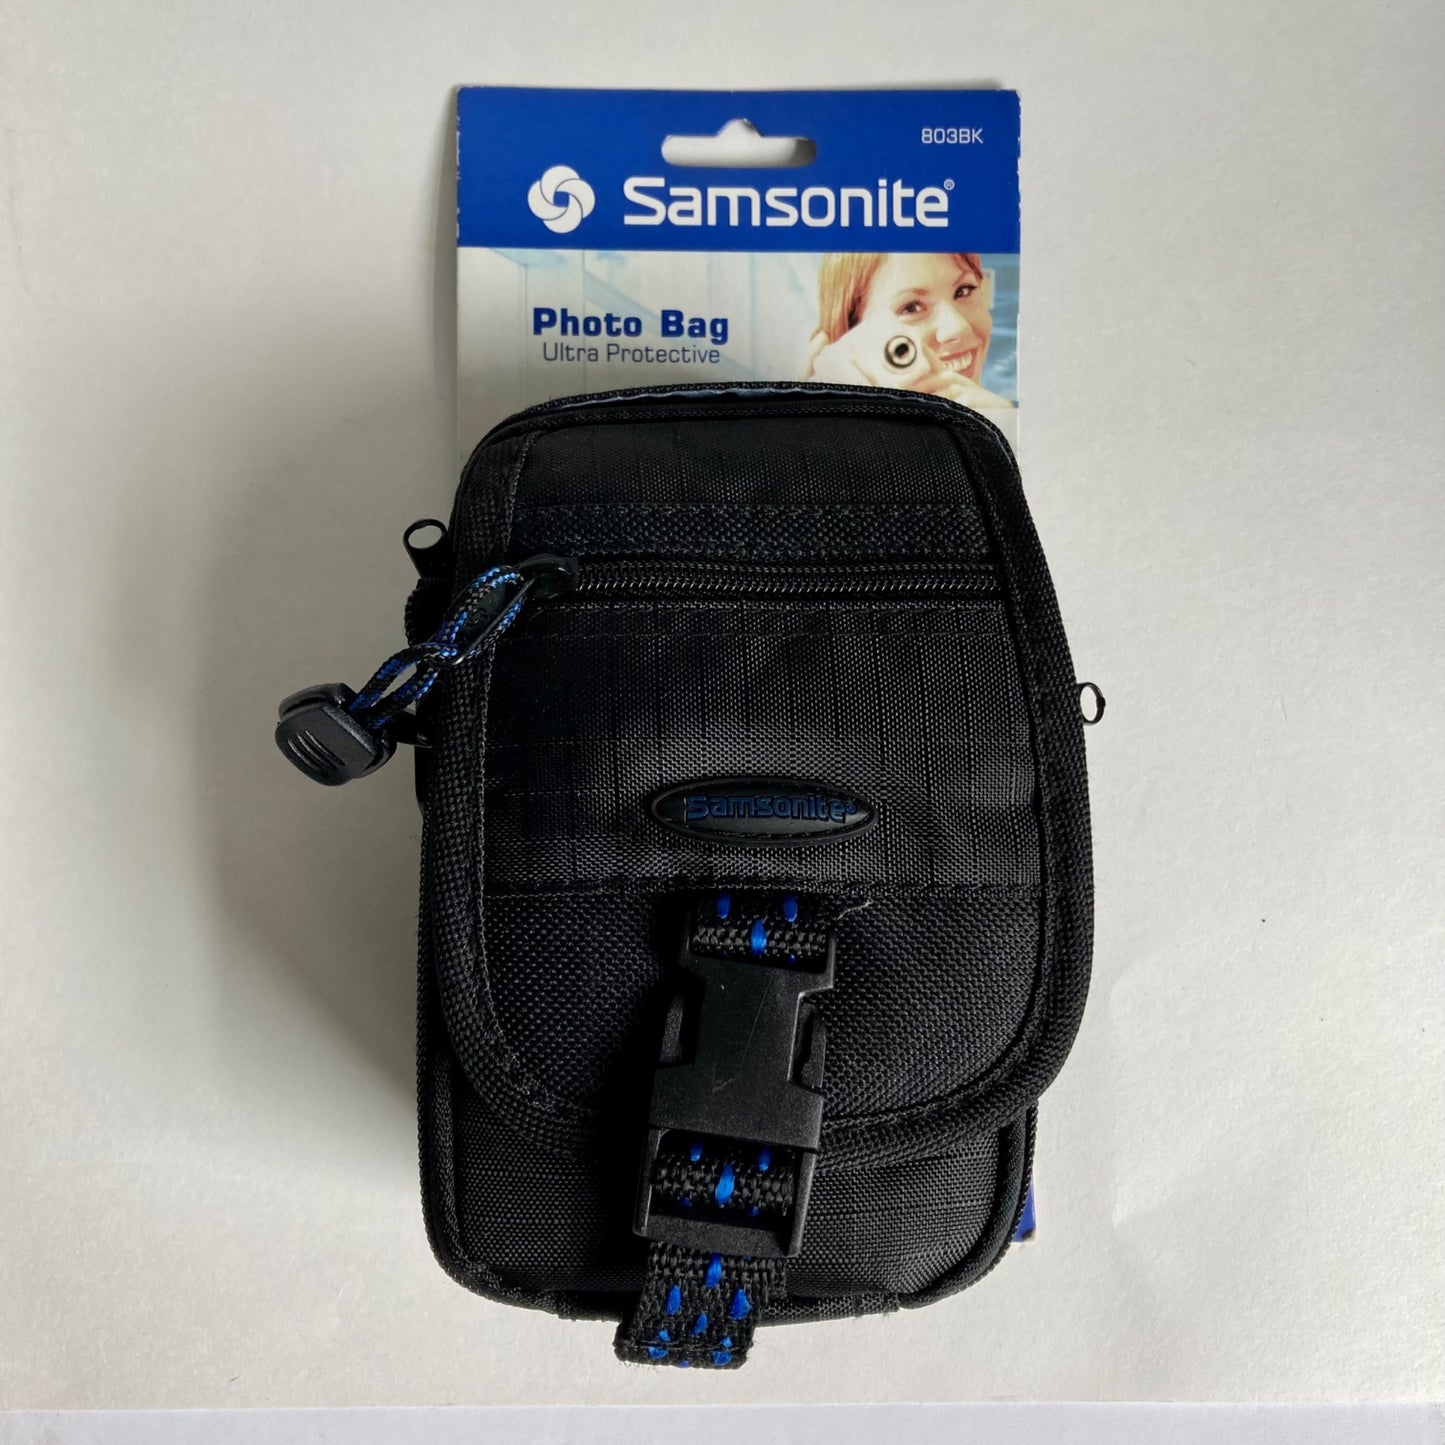 Samsonite 803BK Photo Bag 5-Pocket Small Camera Case w/ Shoulder Strap NEW!